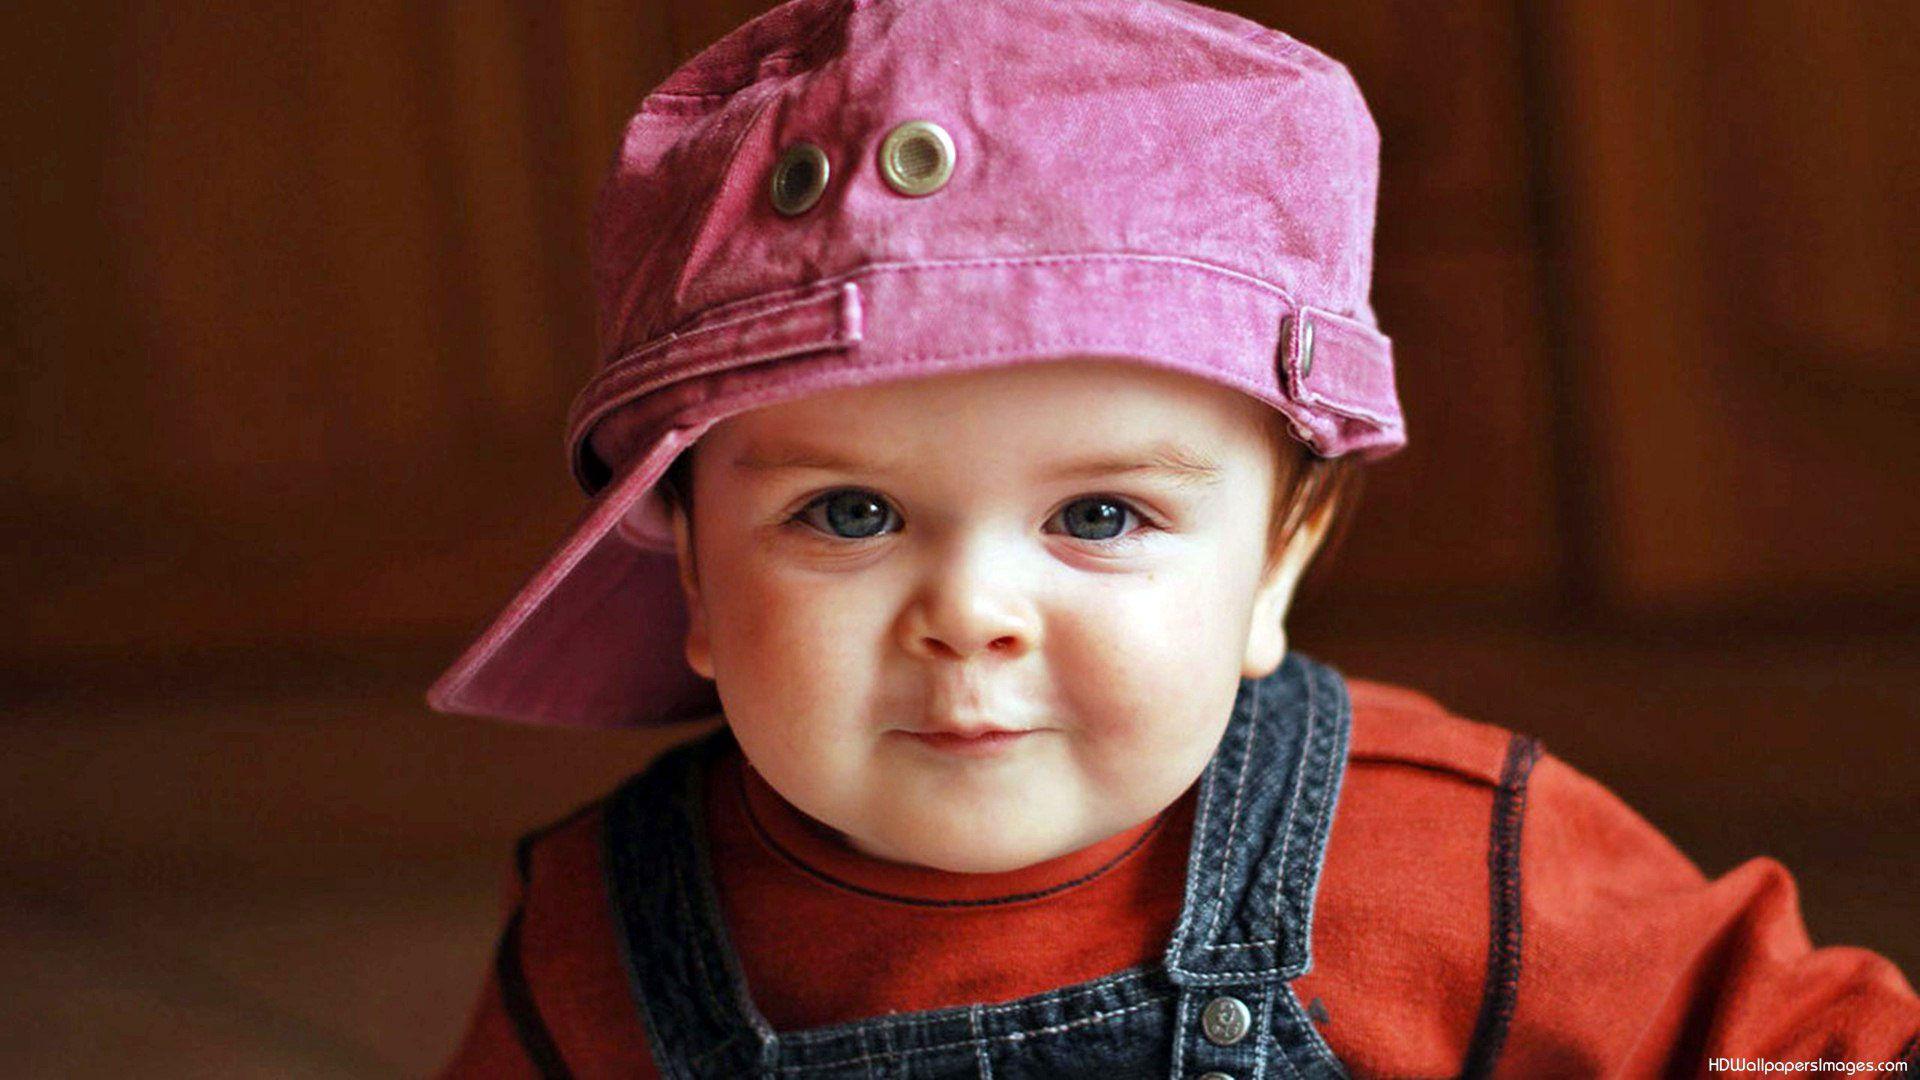 BABY LITTLE BOY CUTE CAP WALLPAPER (1080p) IMAGE. Cute baby boy image, Cute baby boy picture, Baby boy picture